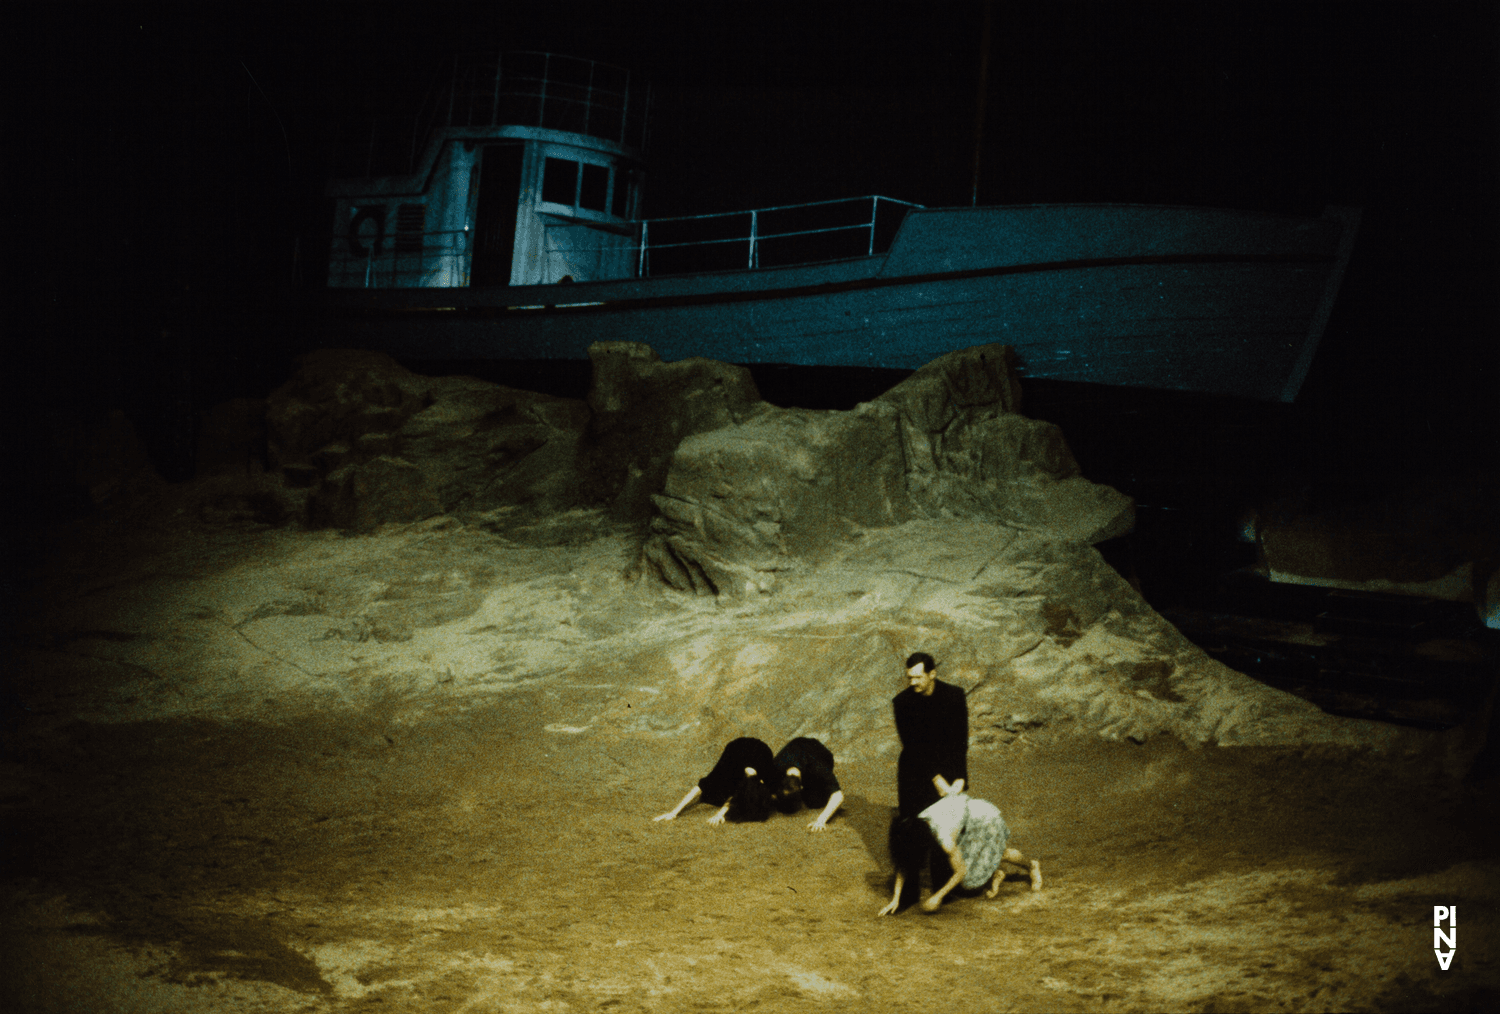 Jan Minařík and Beatrice Libonati in “Das Stück mit dem Schiff (The Piece with the Ship)” by Pina Bausch